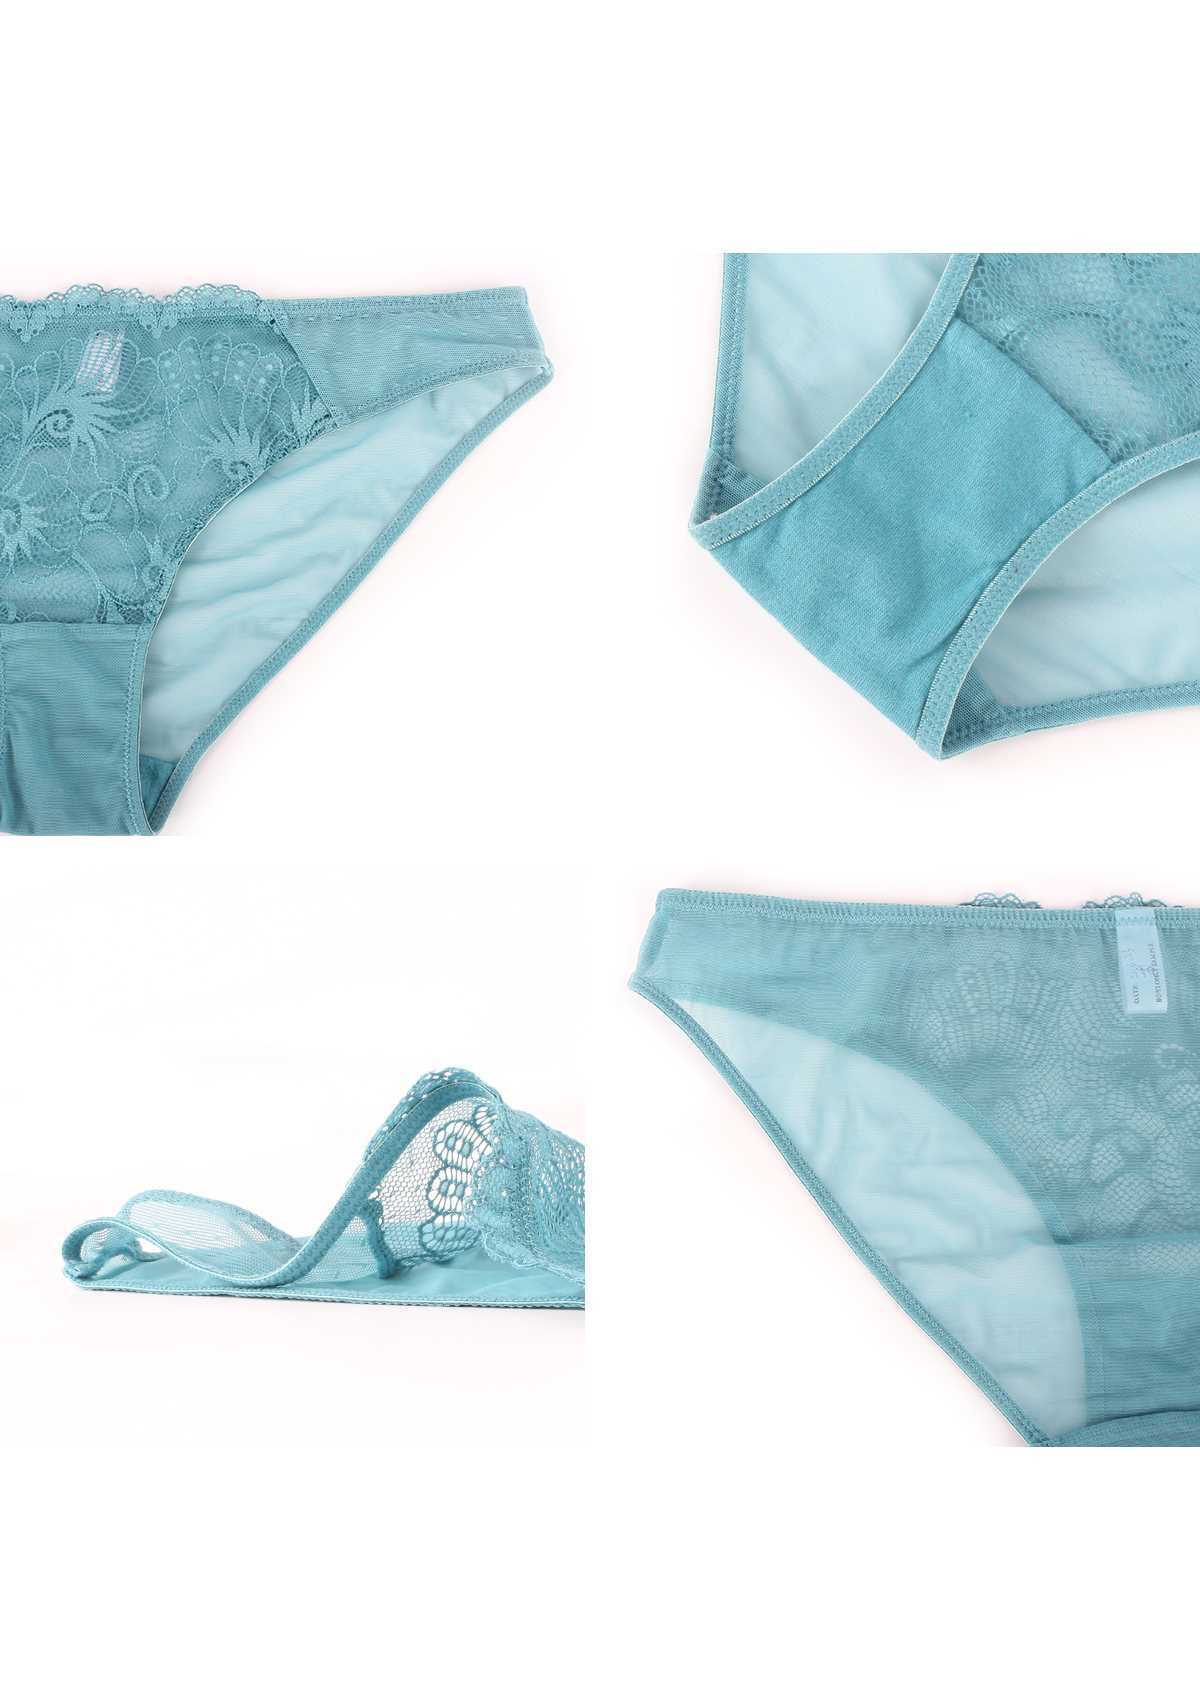 HSIA Front Lace Bikini Panties 3 Pack - S / Black+Burgundy+Crystal Blue